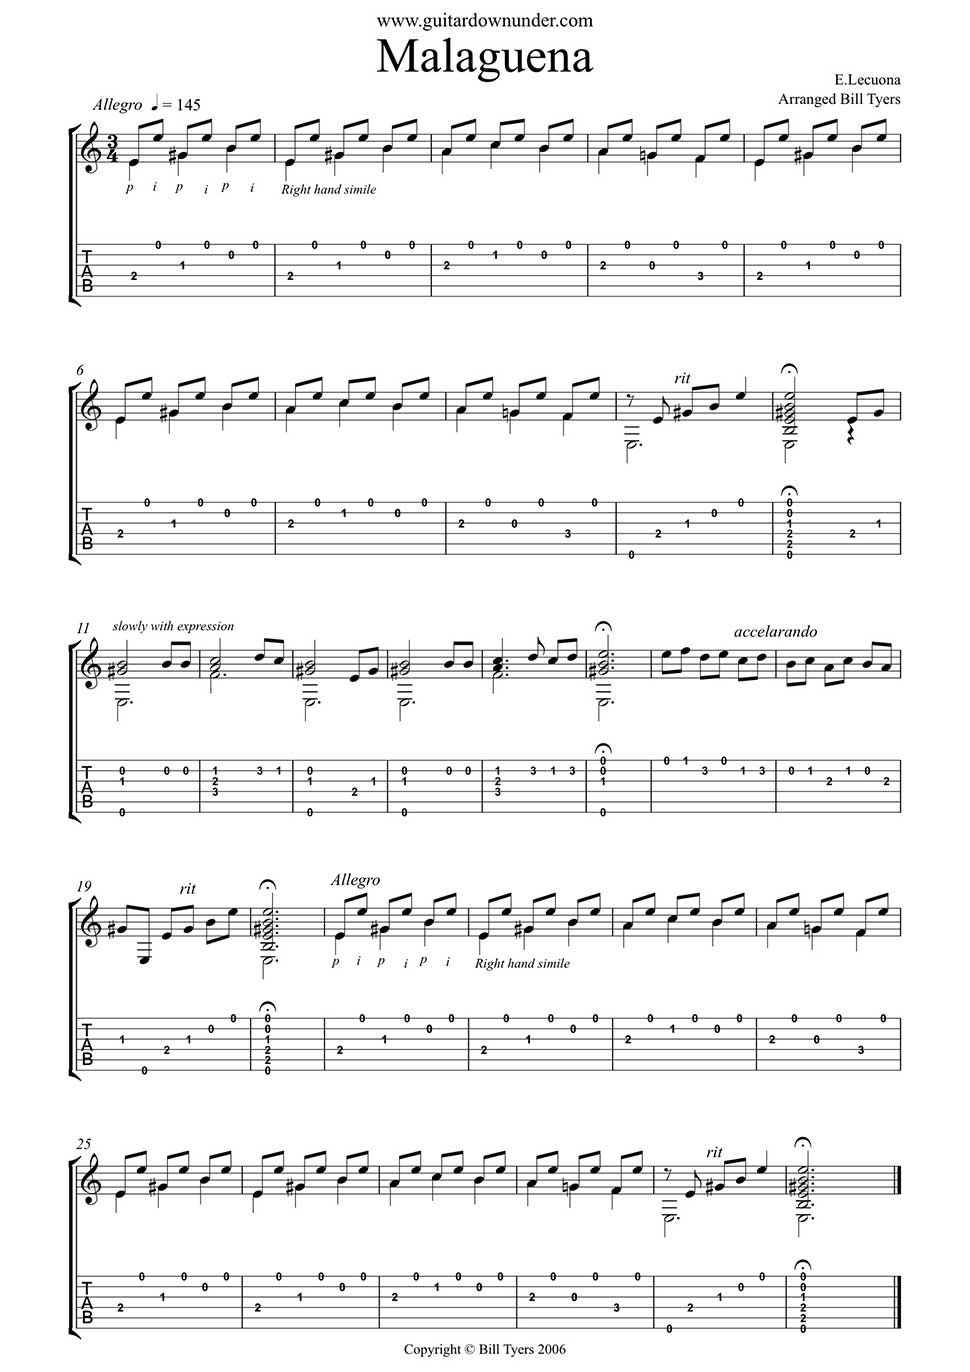 guitar notes pdf